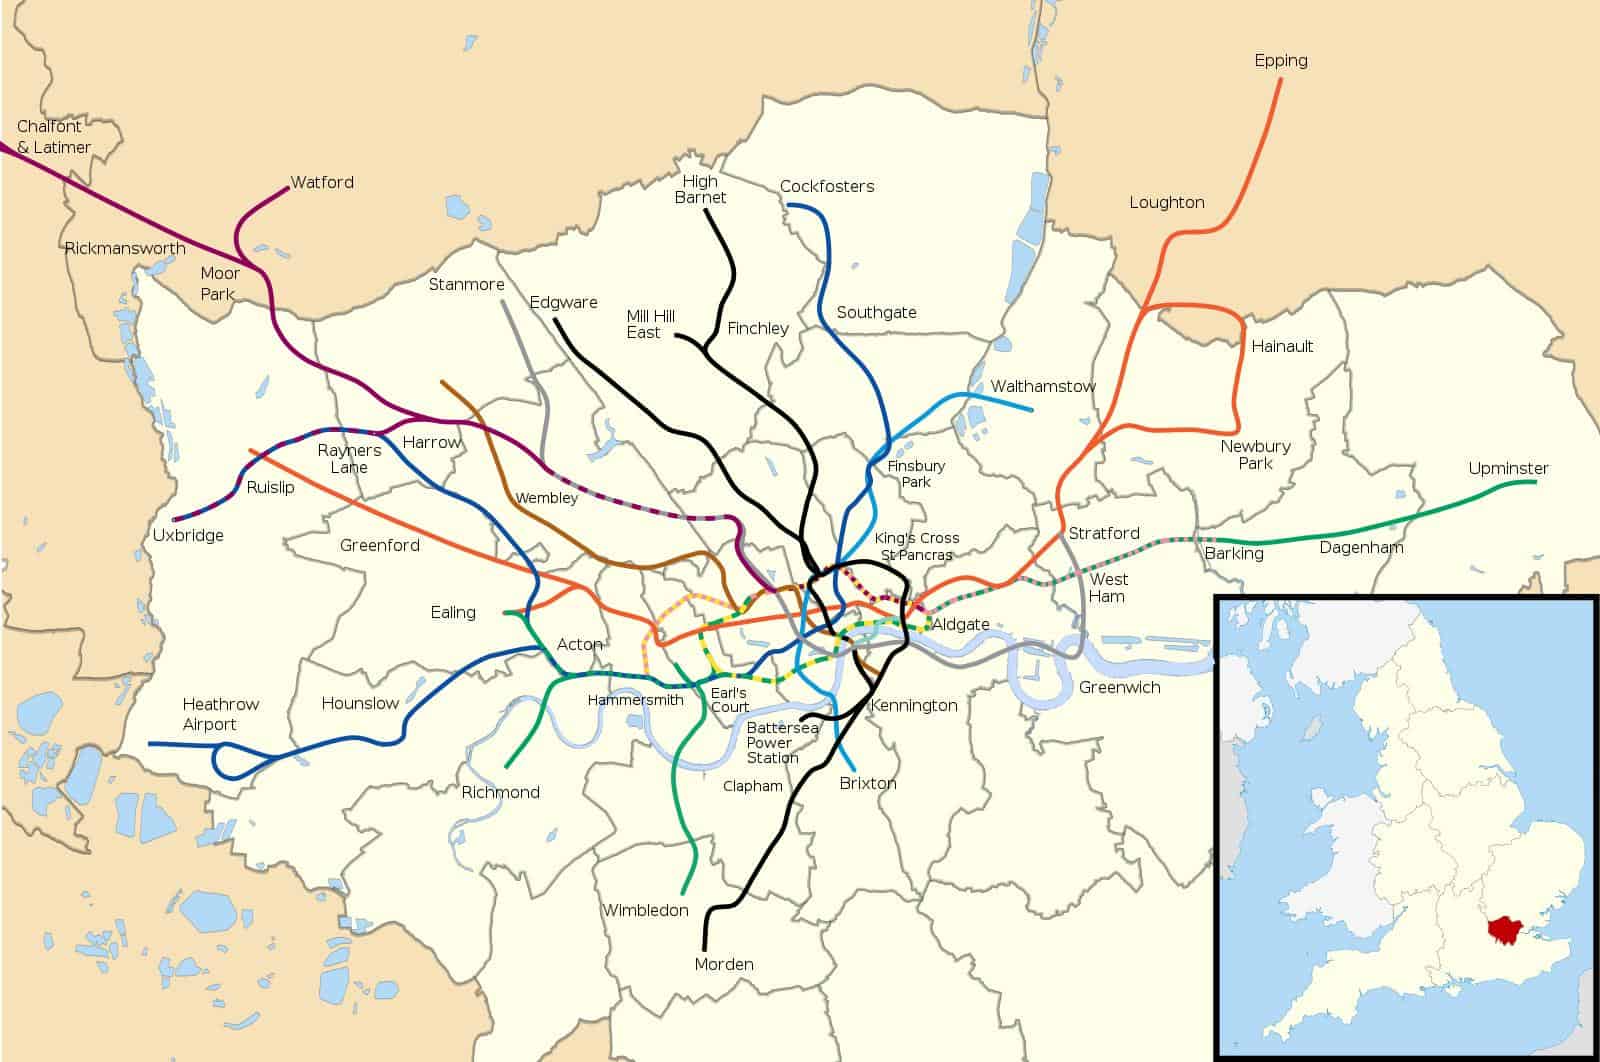 London Underground Map via Wikimedia Commons